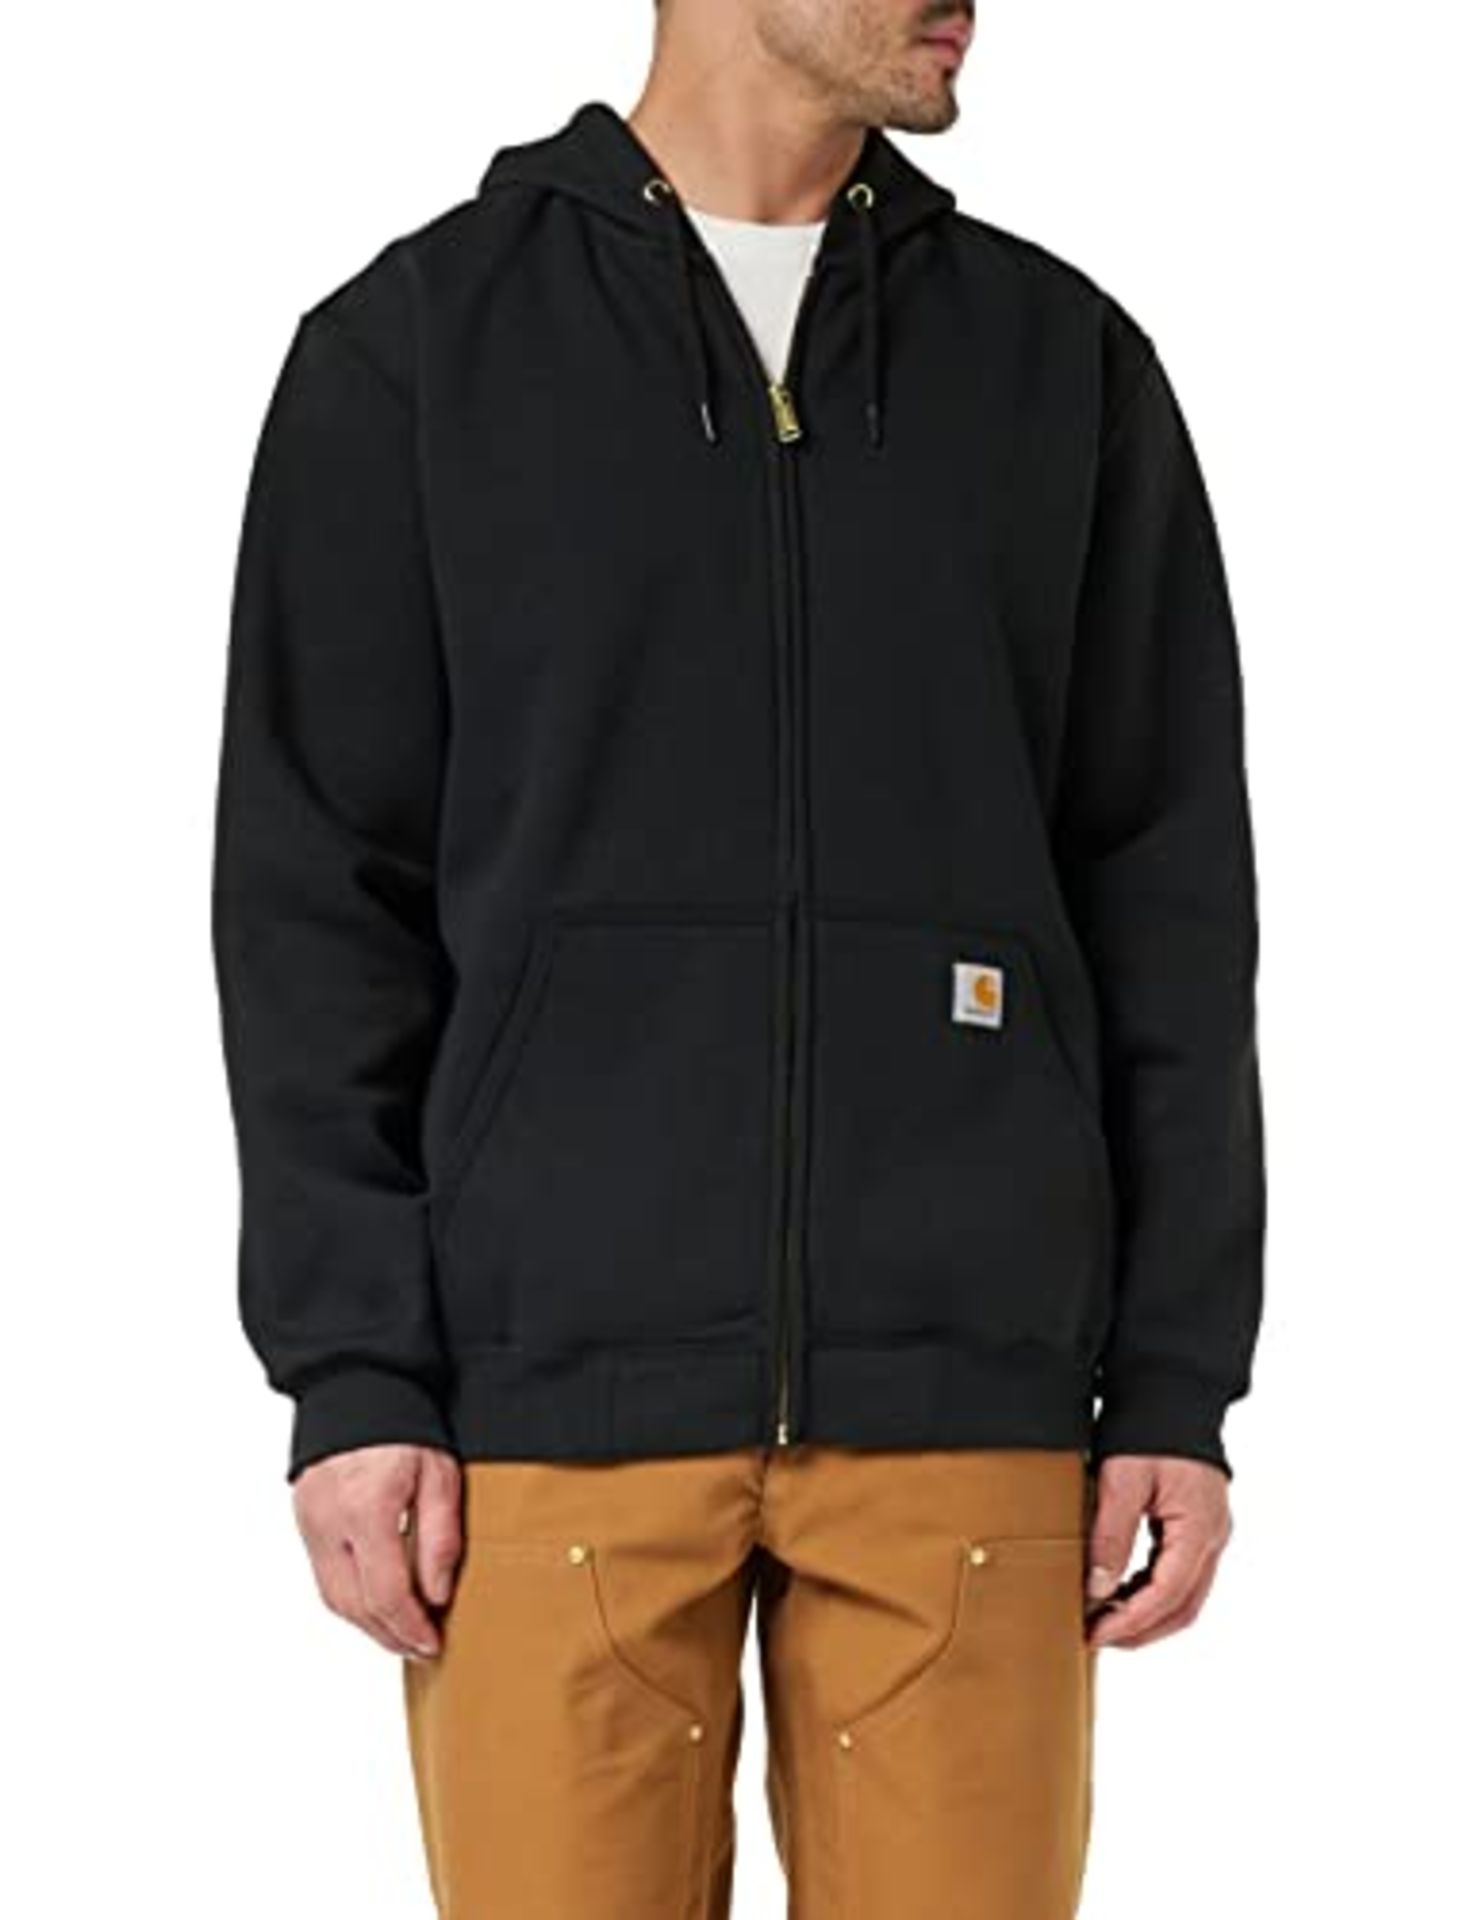 RRP £55.00 Carhartt Men's Loose Fit, Medium-Weight Full-Zip Sweatshirt, Black, L